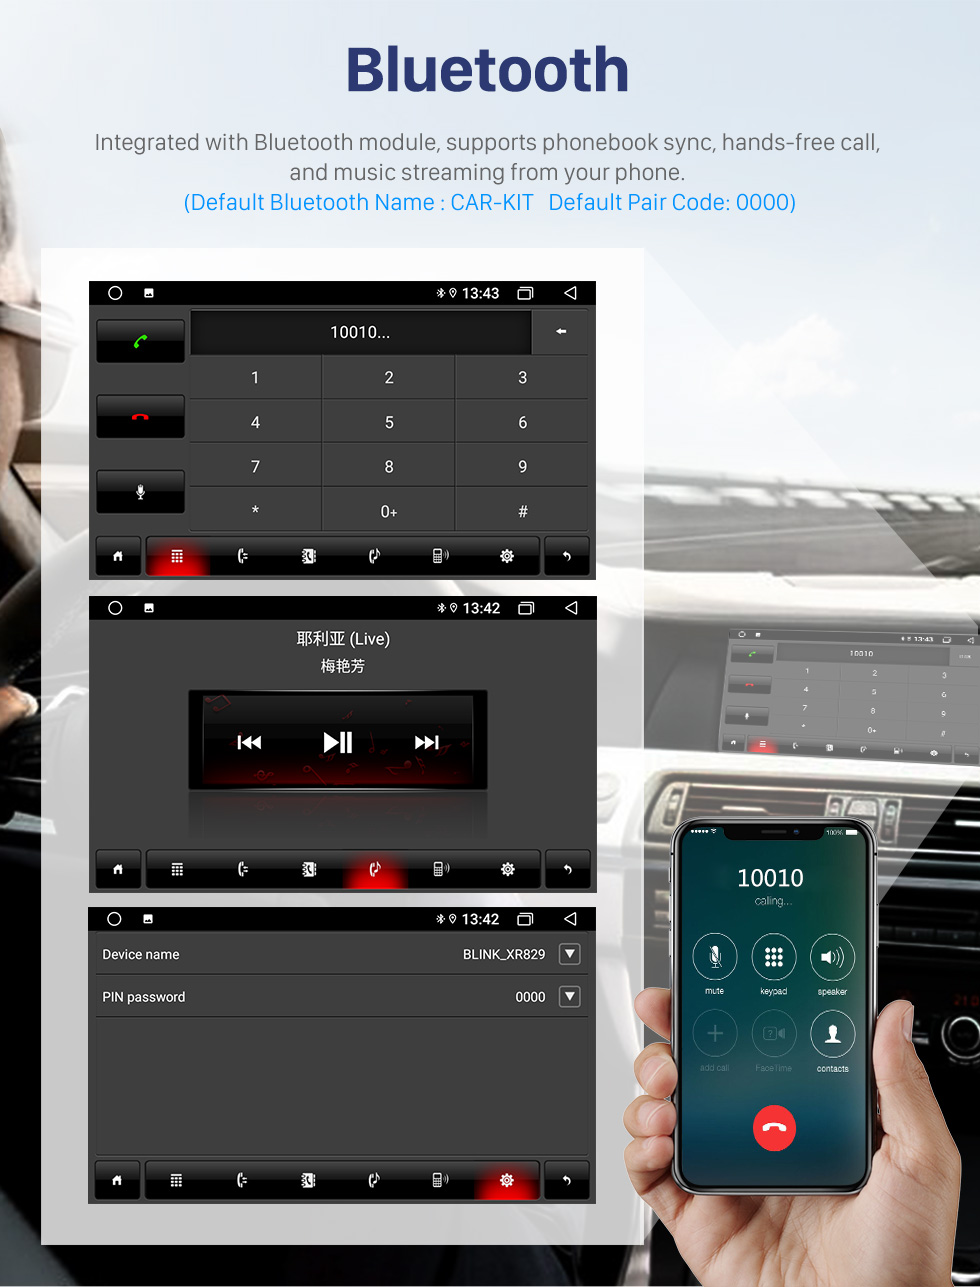 Seicane OEM 9 pulgadas Android 10.0 Radio para 2009-2014 Toyota Sienna Bluetooth HD Pantalla táctil Navegación GPS Soporte USB AUX Carplay DVR OBD Cámara de visión trasera